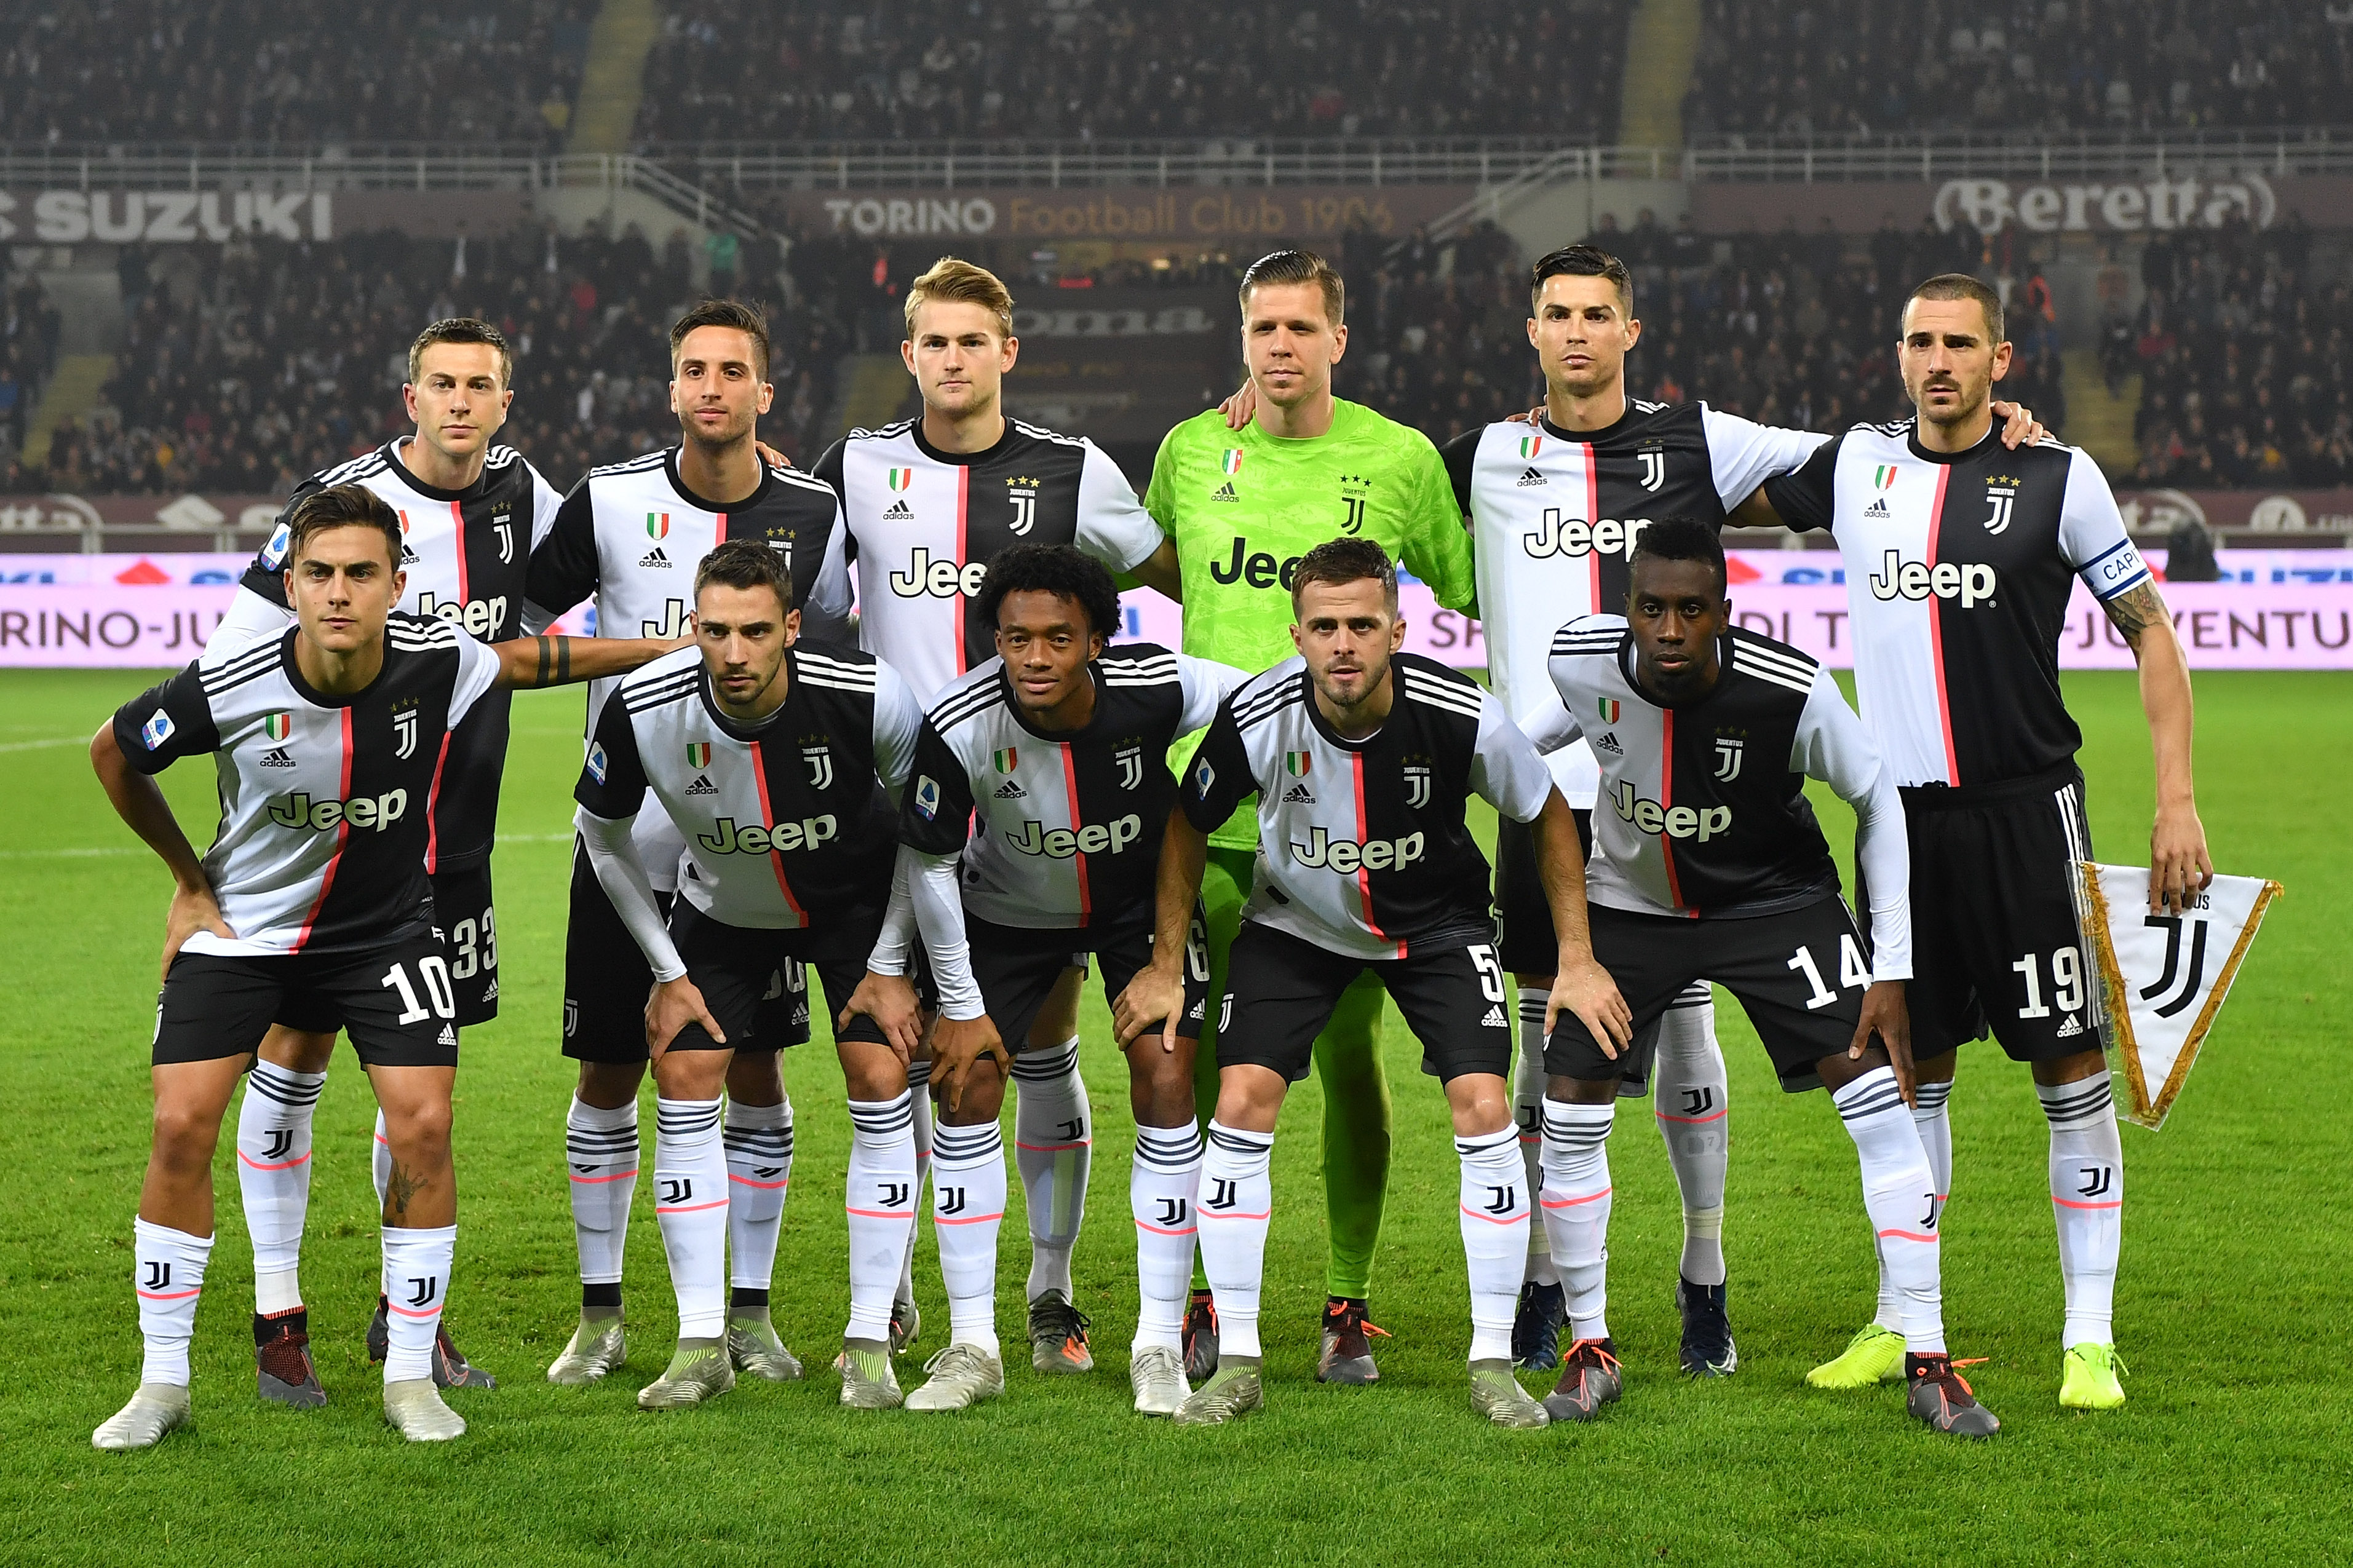 Club: Juventus FC